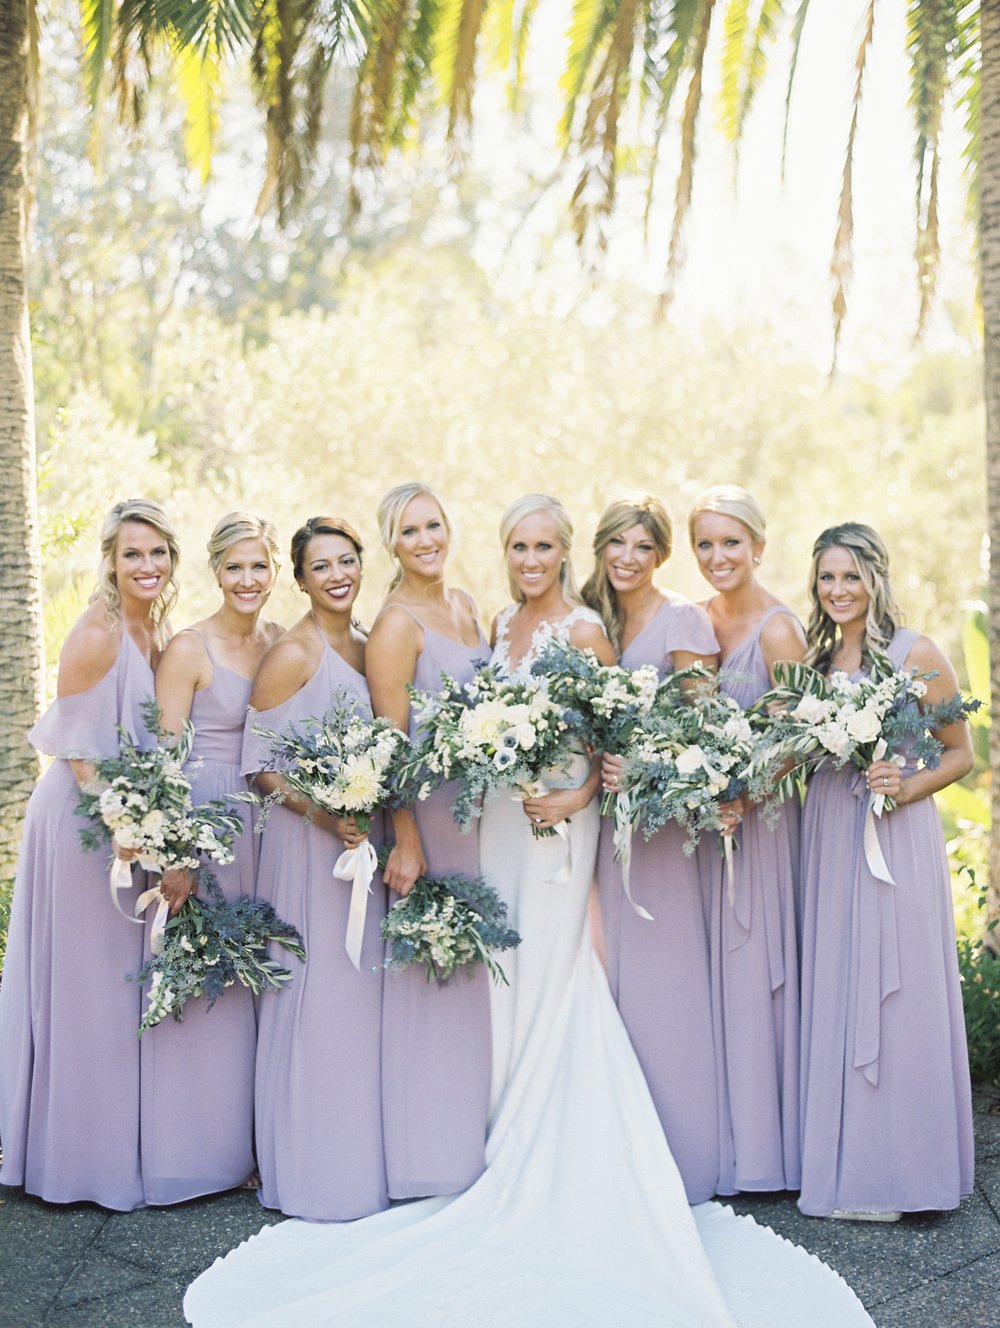 Lilac Bridesmaid Dresses for Weddings